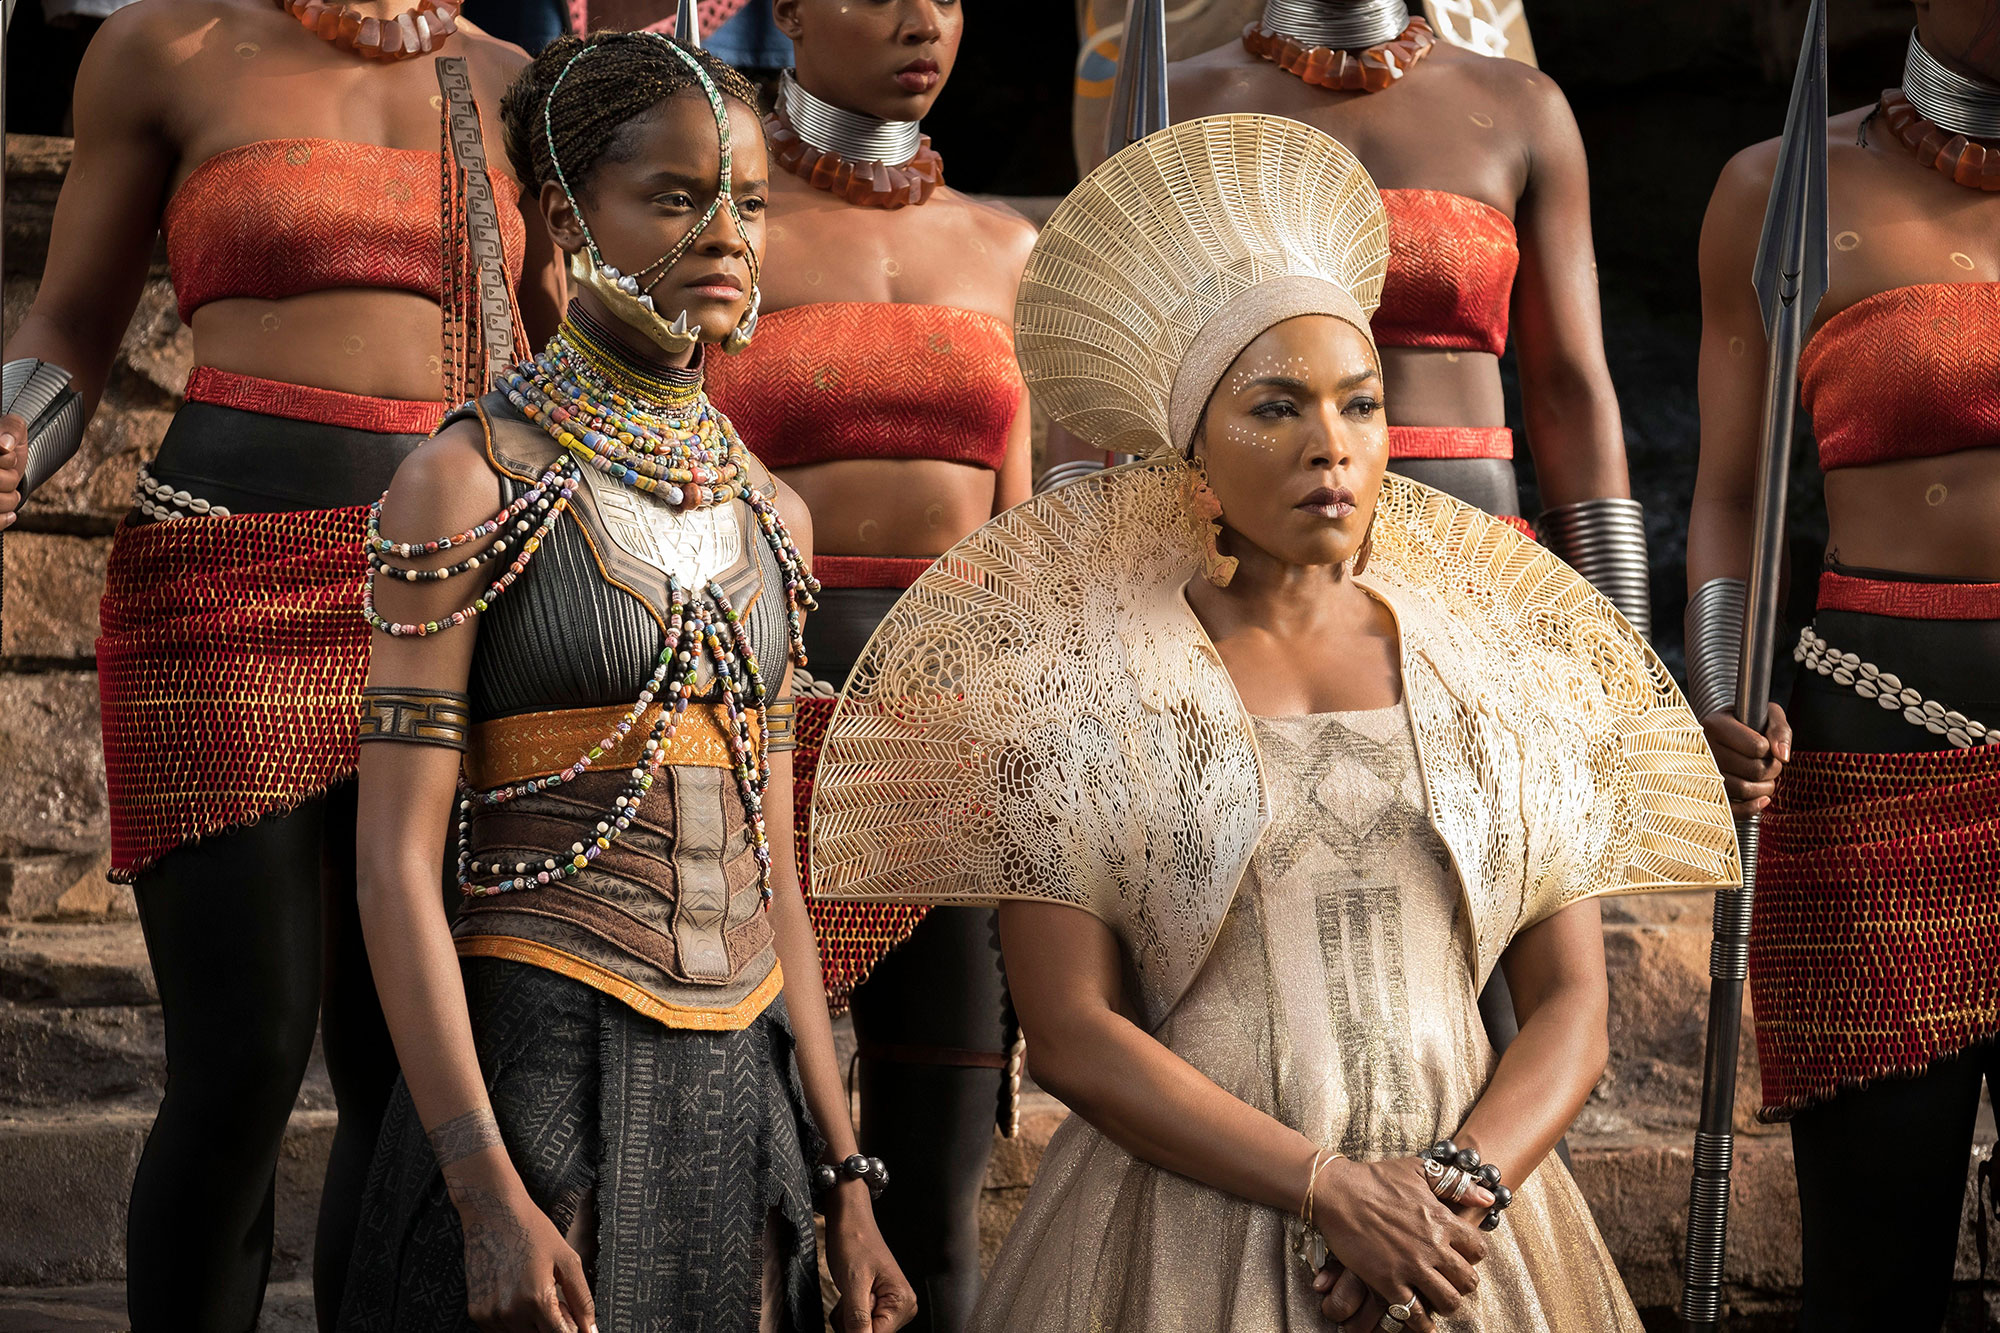 Forever After: Letitia Wright, Lupita Nyong'o, Danai Gurira, Winston Duke,  and Dominique Thorne return to Wakanda - EBONY